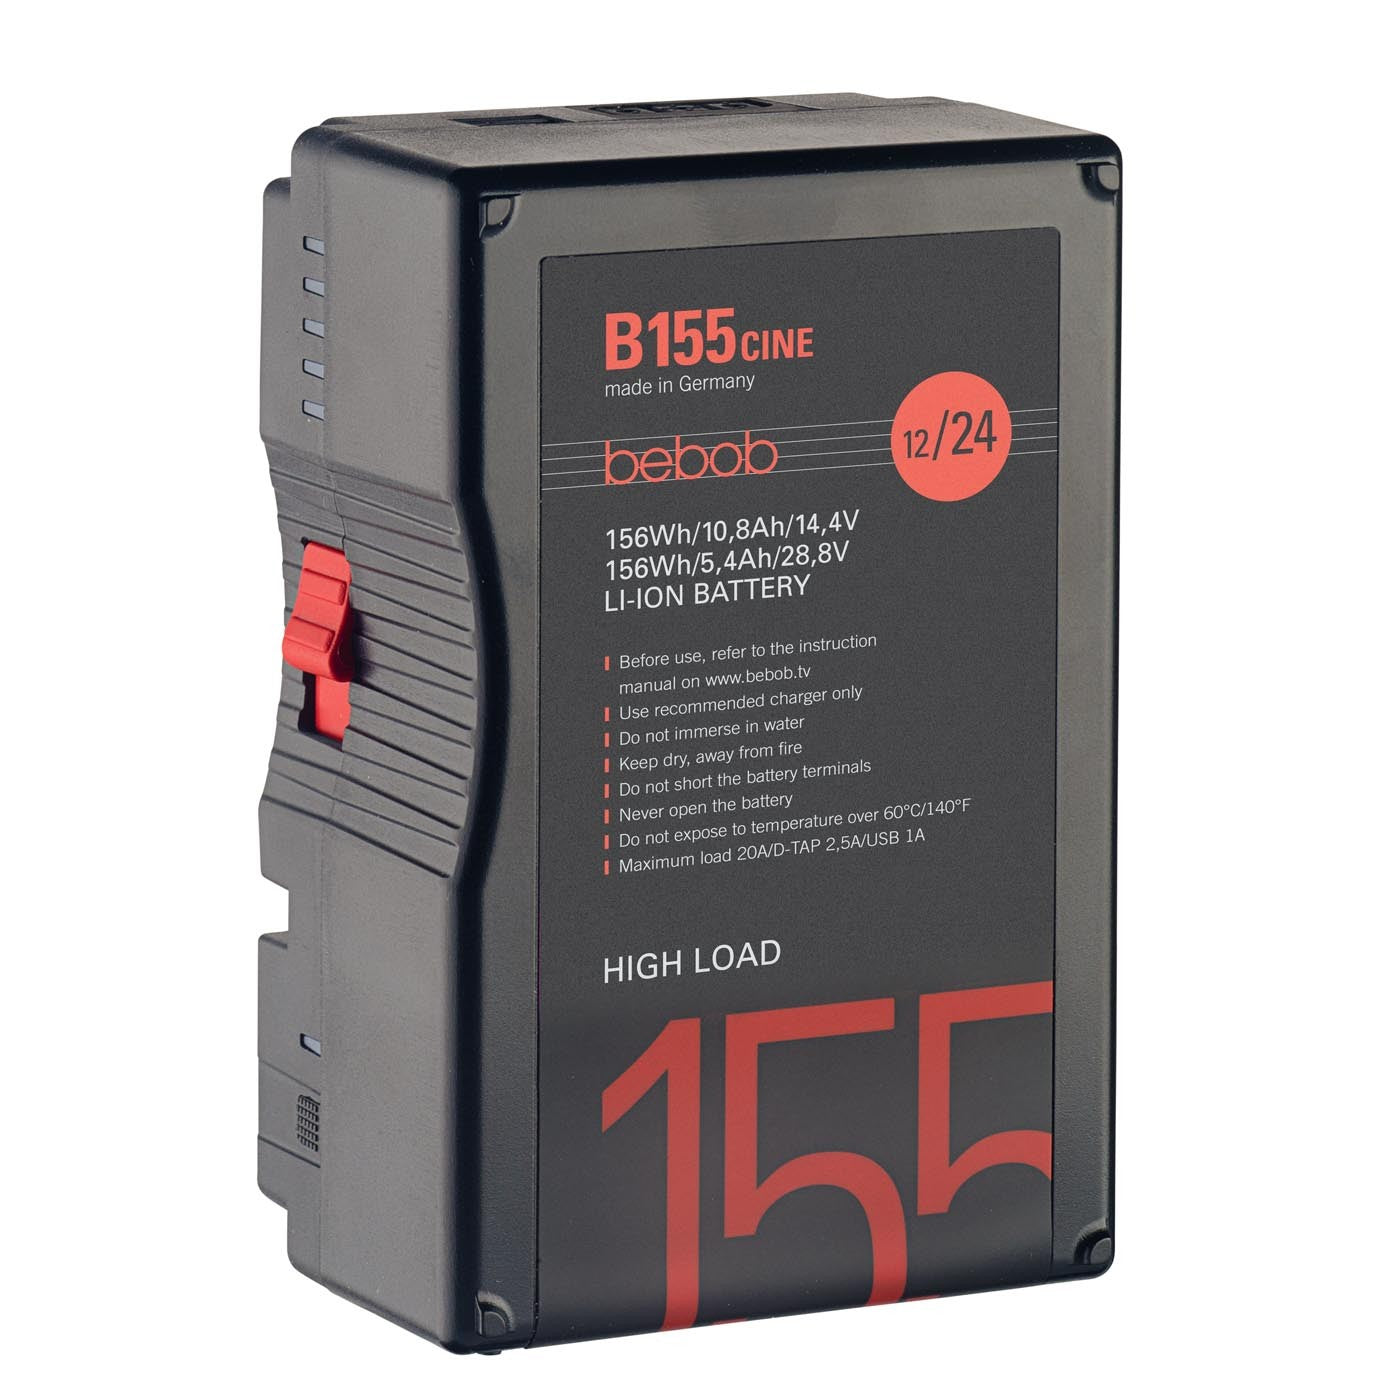 Bebob B155CINE 156Wh Battery